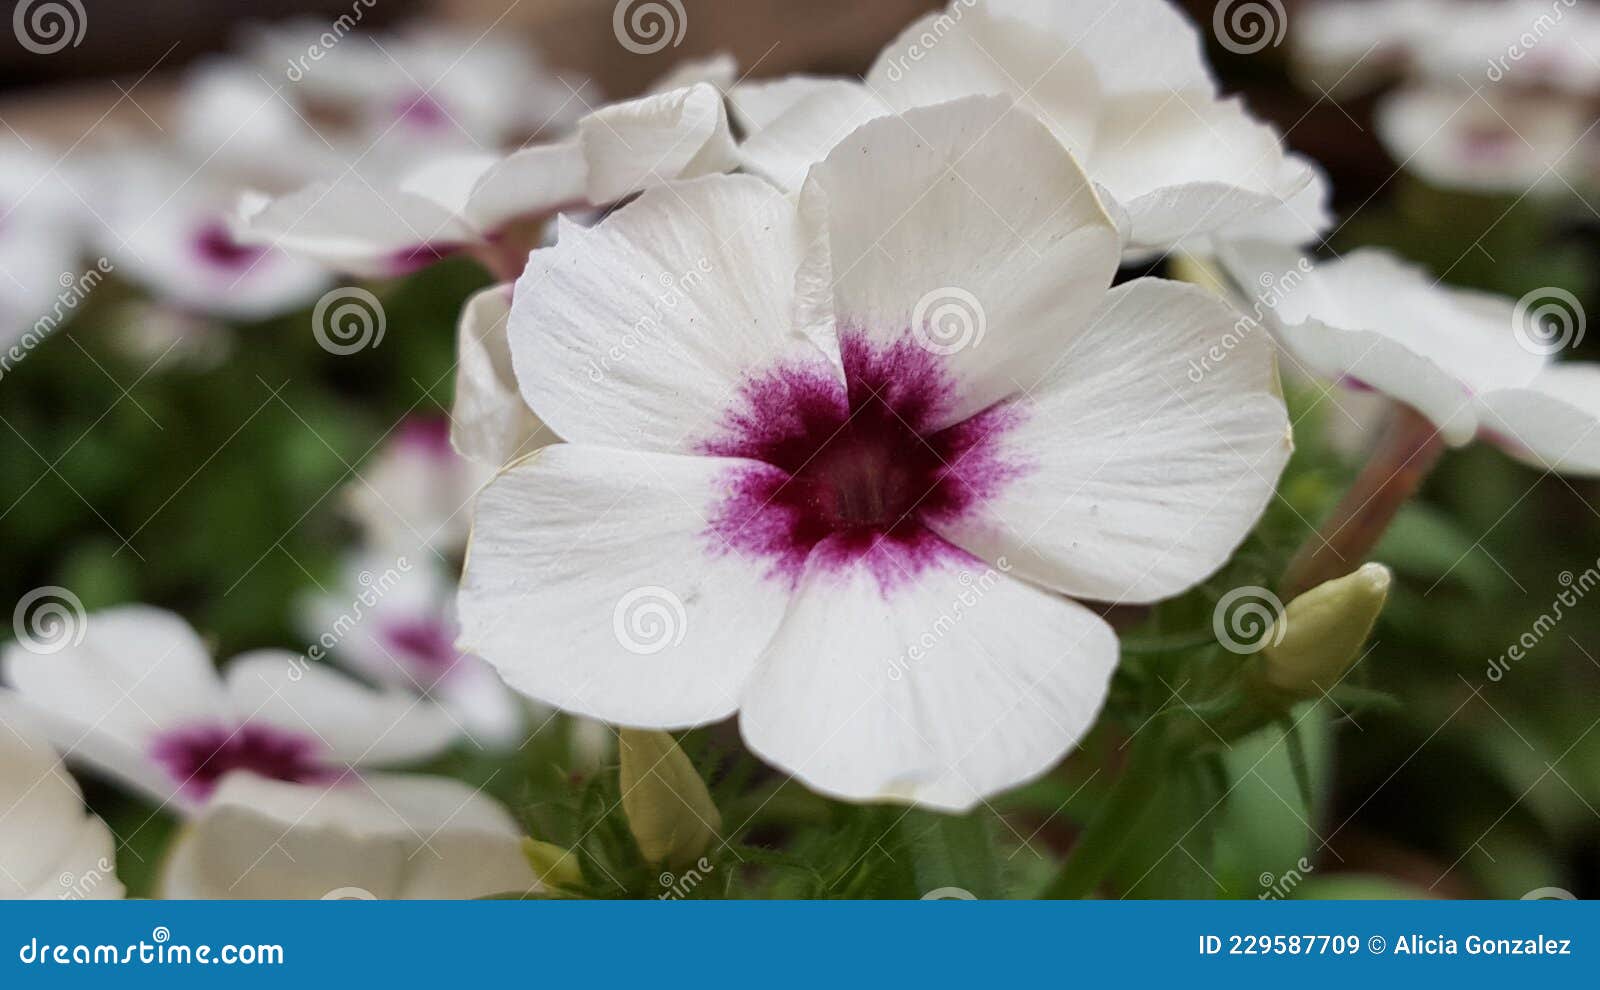 petunia close up flower white a purple center 2021